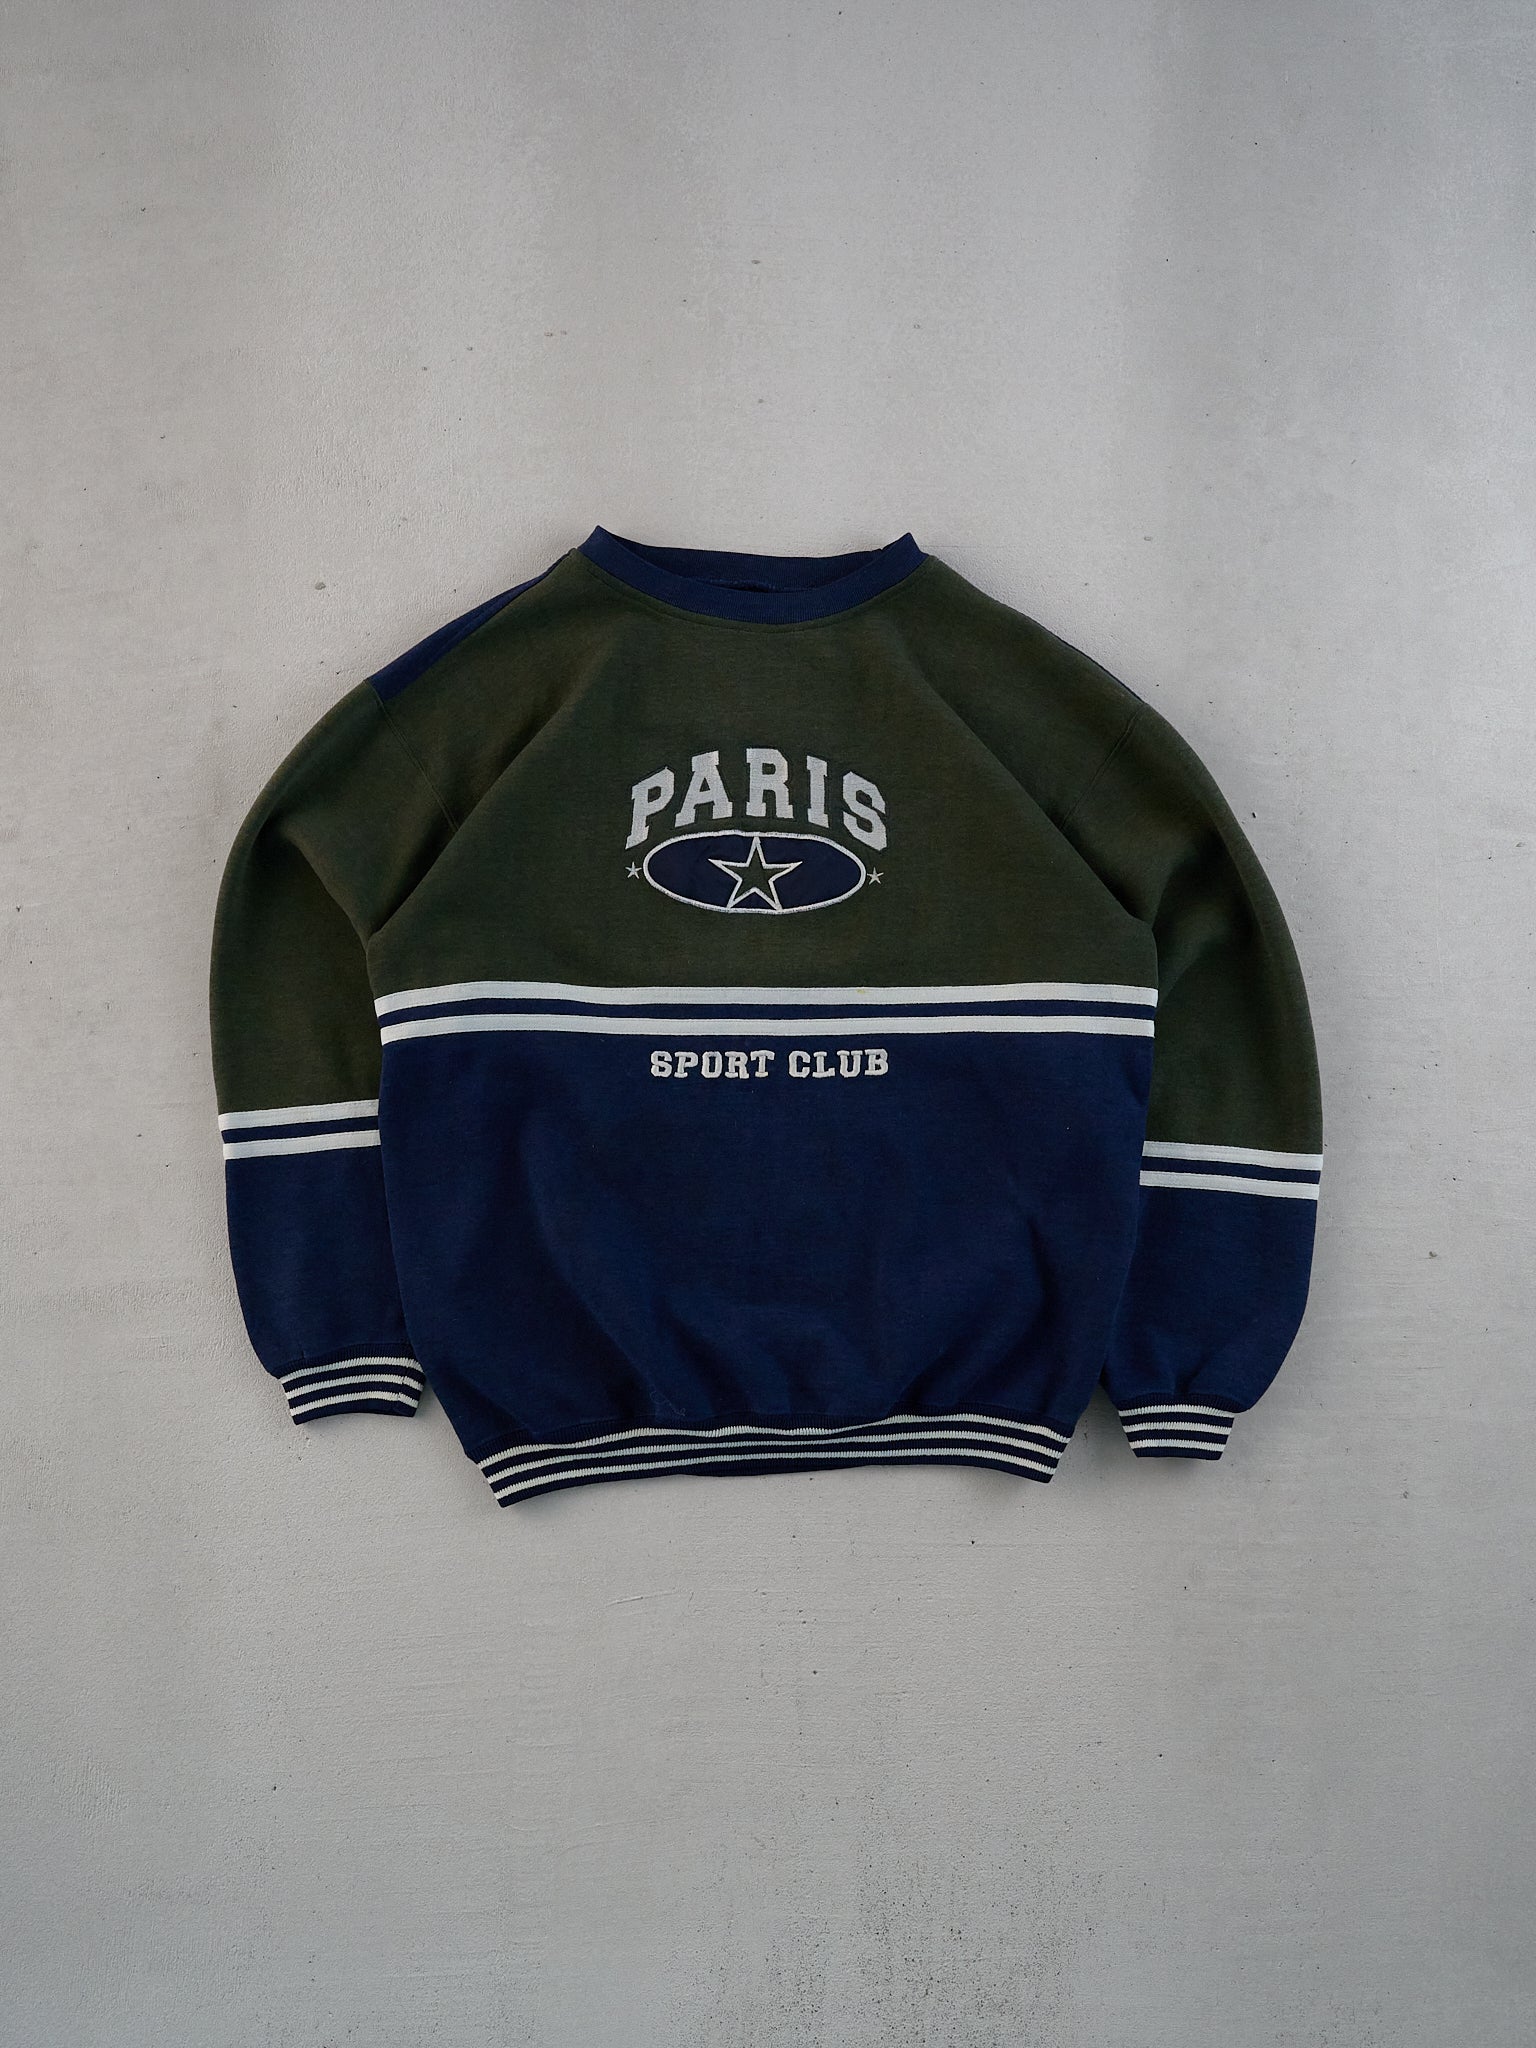 Vintage 90s Green and Blue Paris Sports Club Crewneck (M)